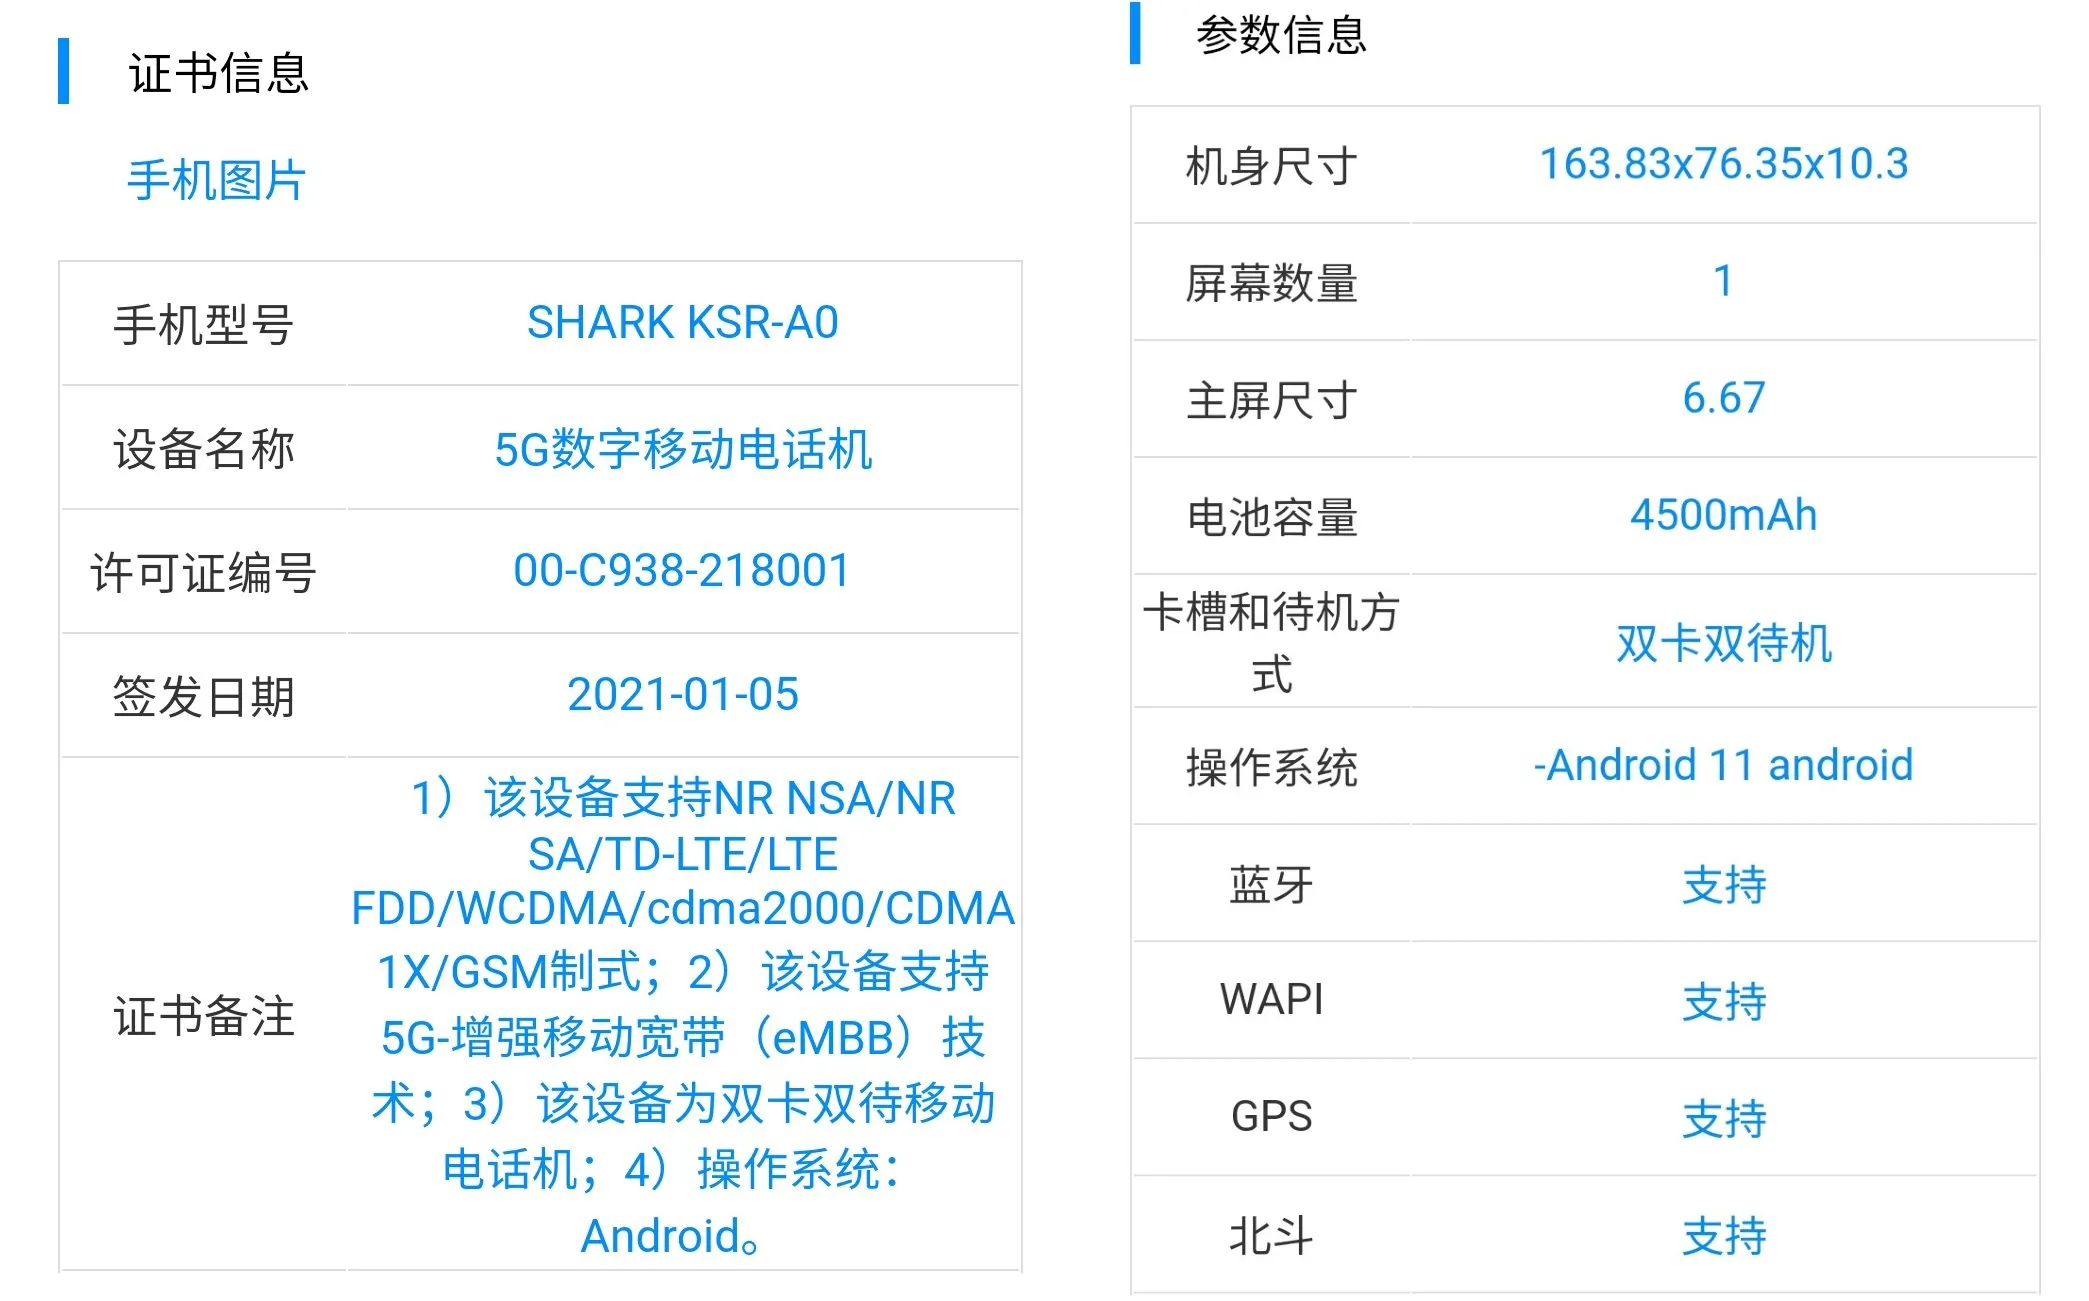 Xiaomi Black Shark 4